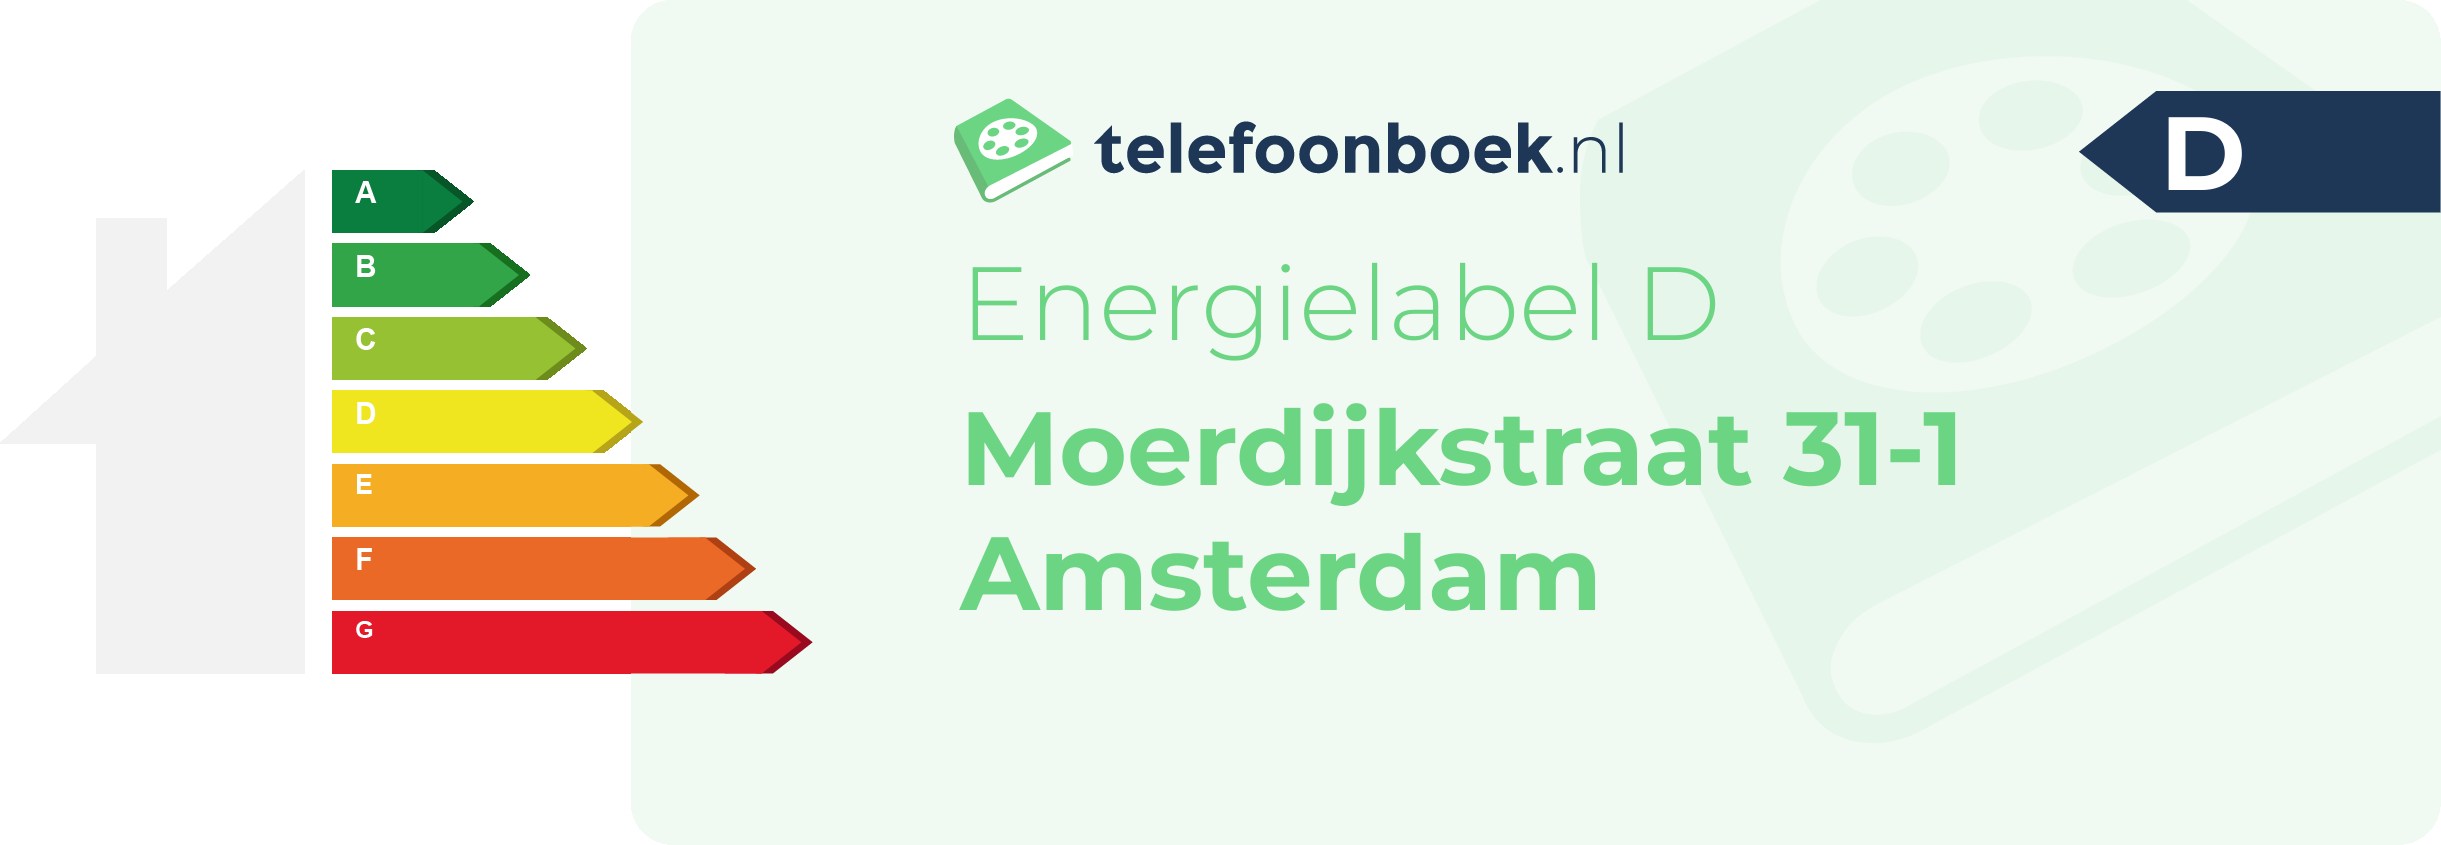 Energielabel Moerdijkstraat 31-1 Amsterdam